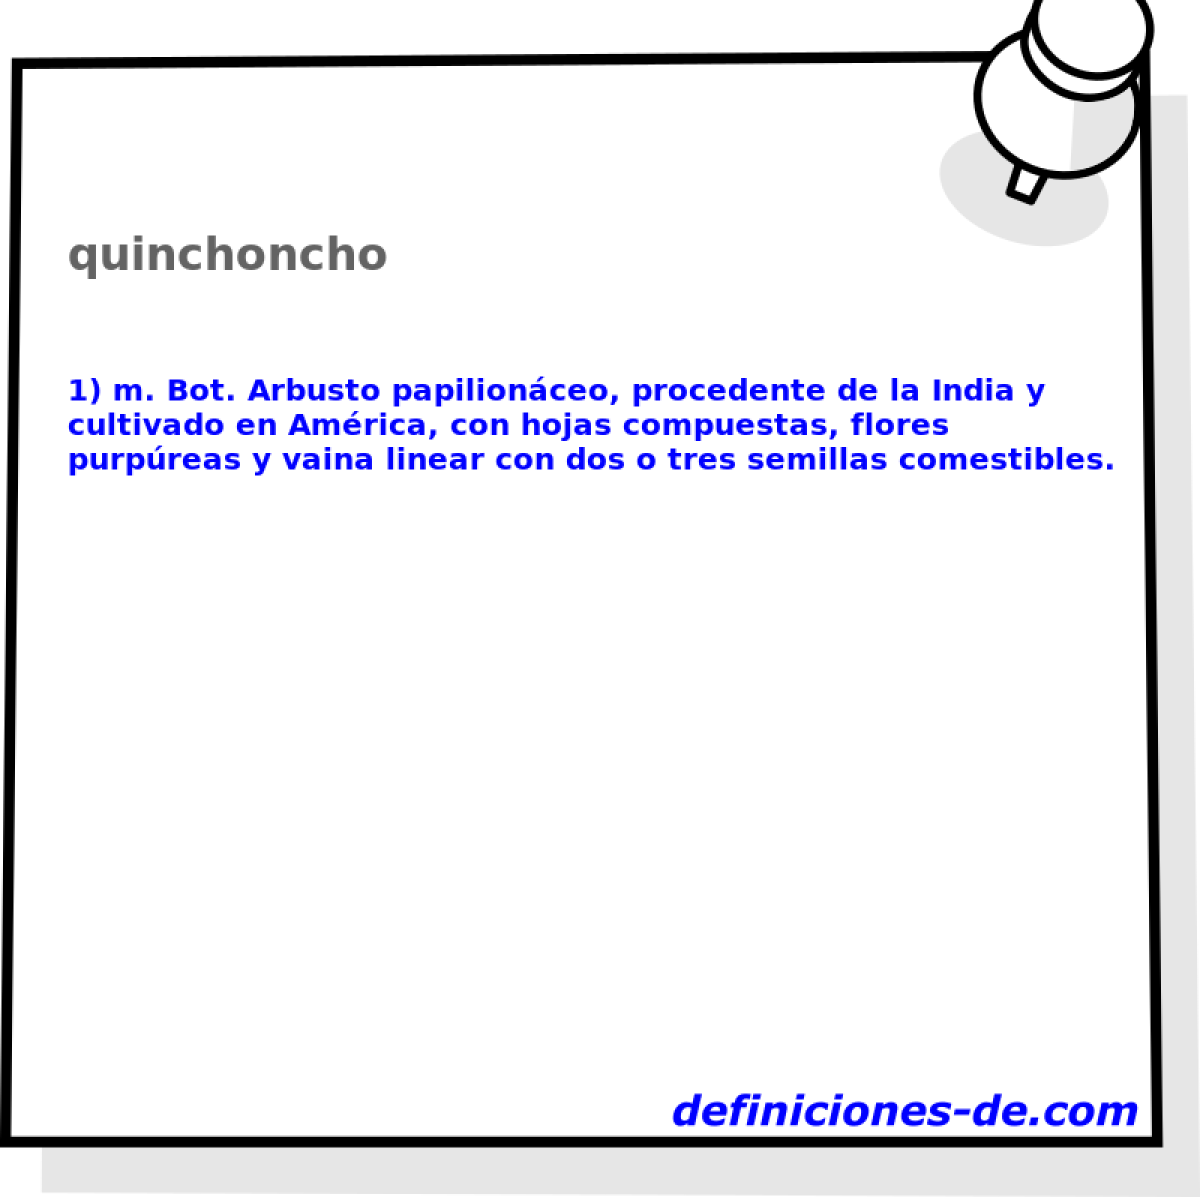 quinchoncho 